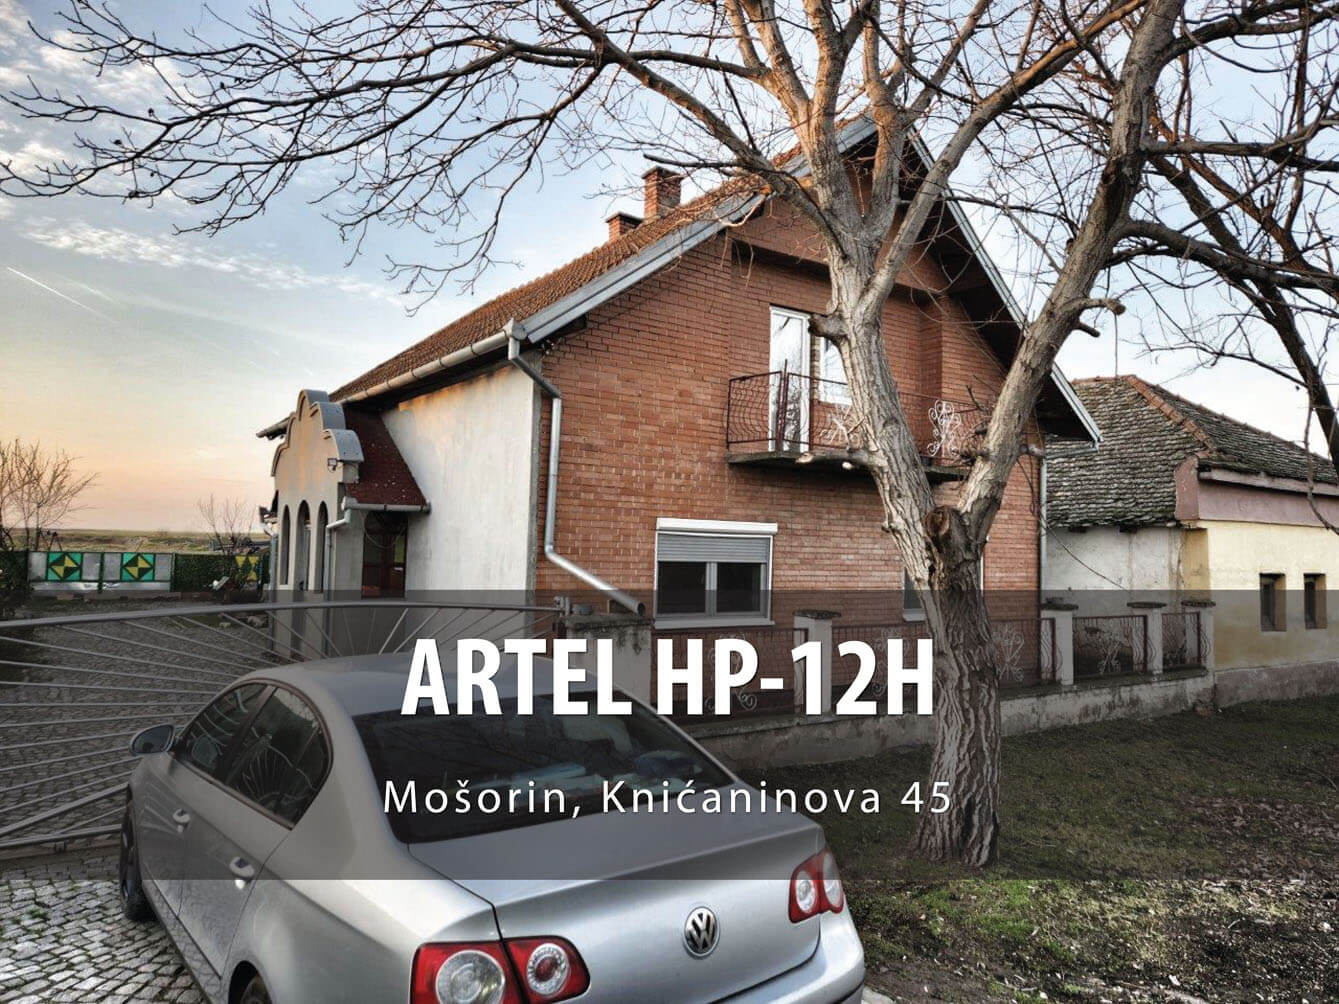 ARTEL HP-12H Mosorin Knicaninova